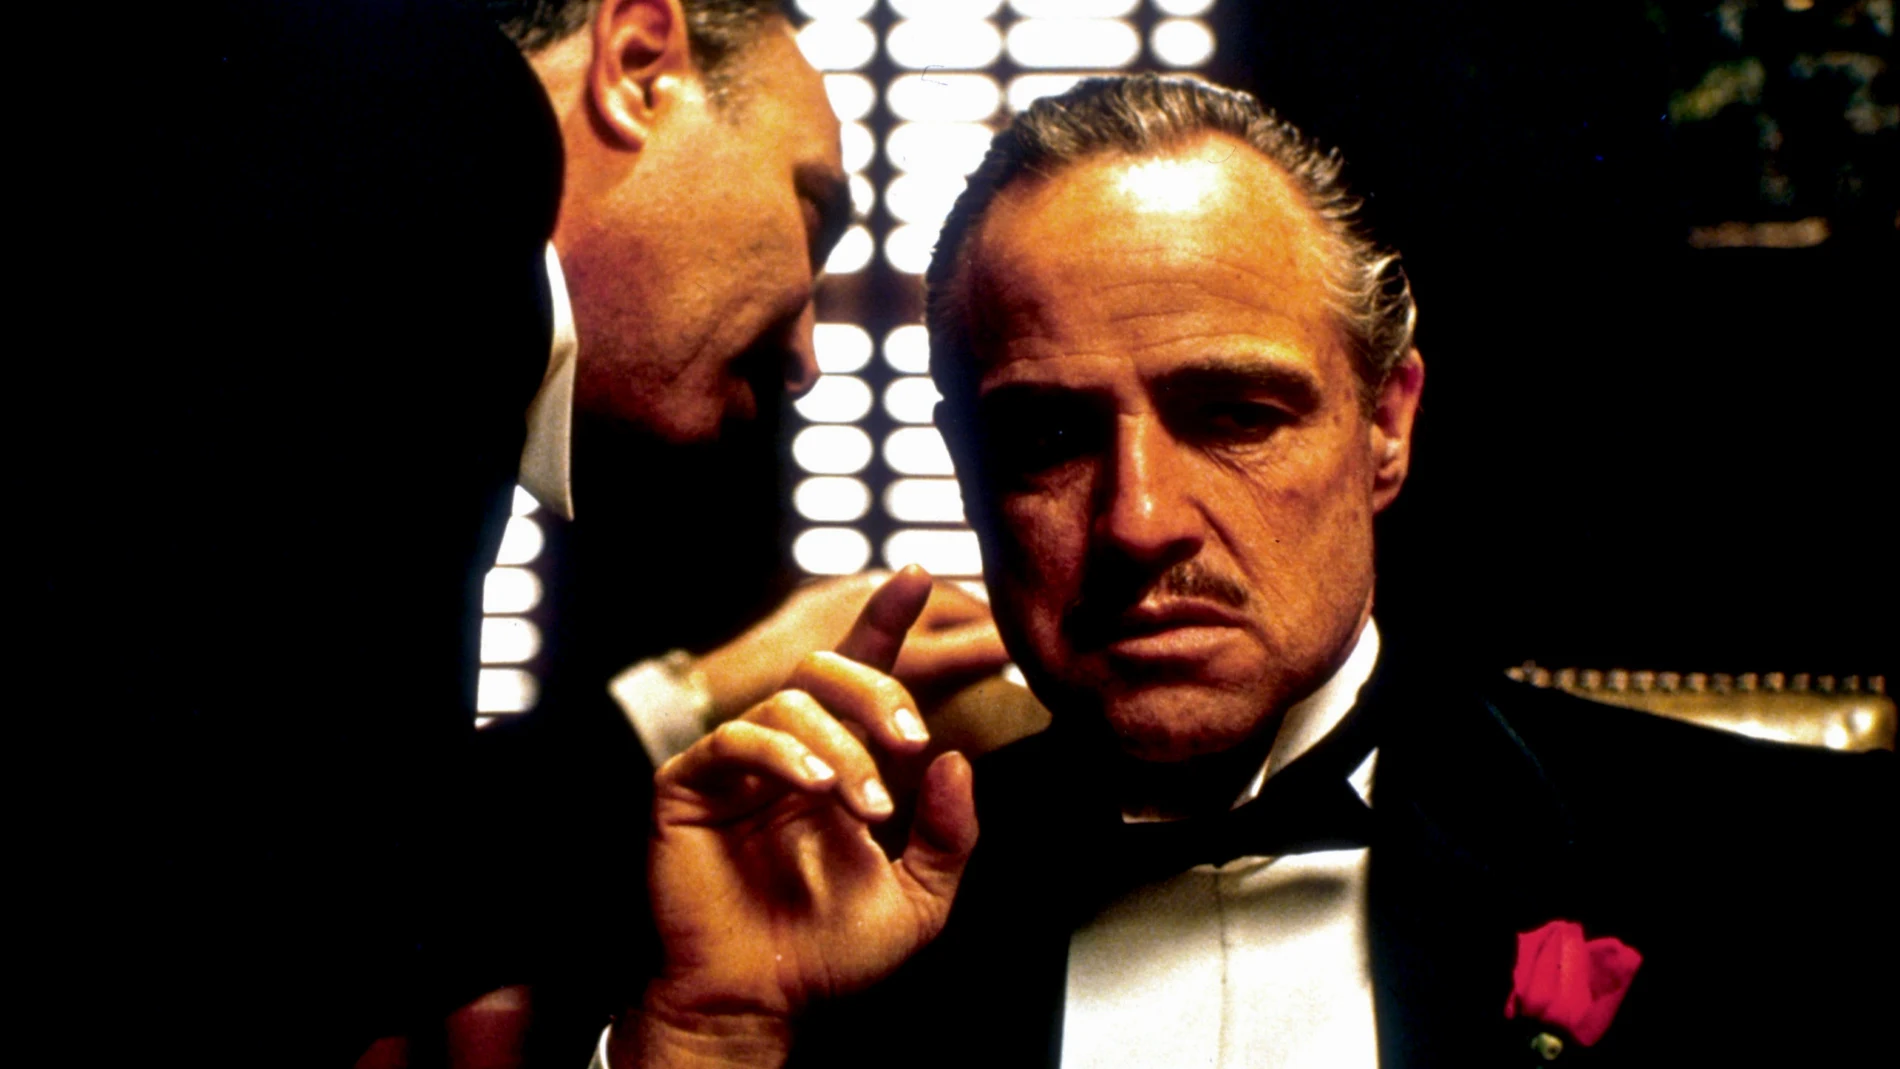 'El padrino' llamado Vito Corleone